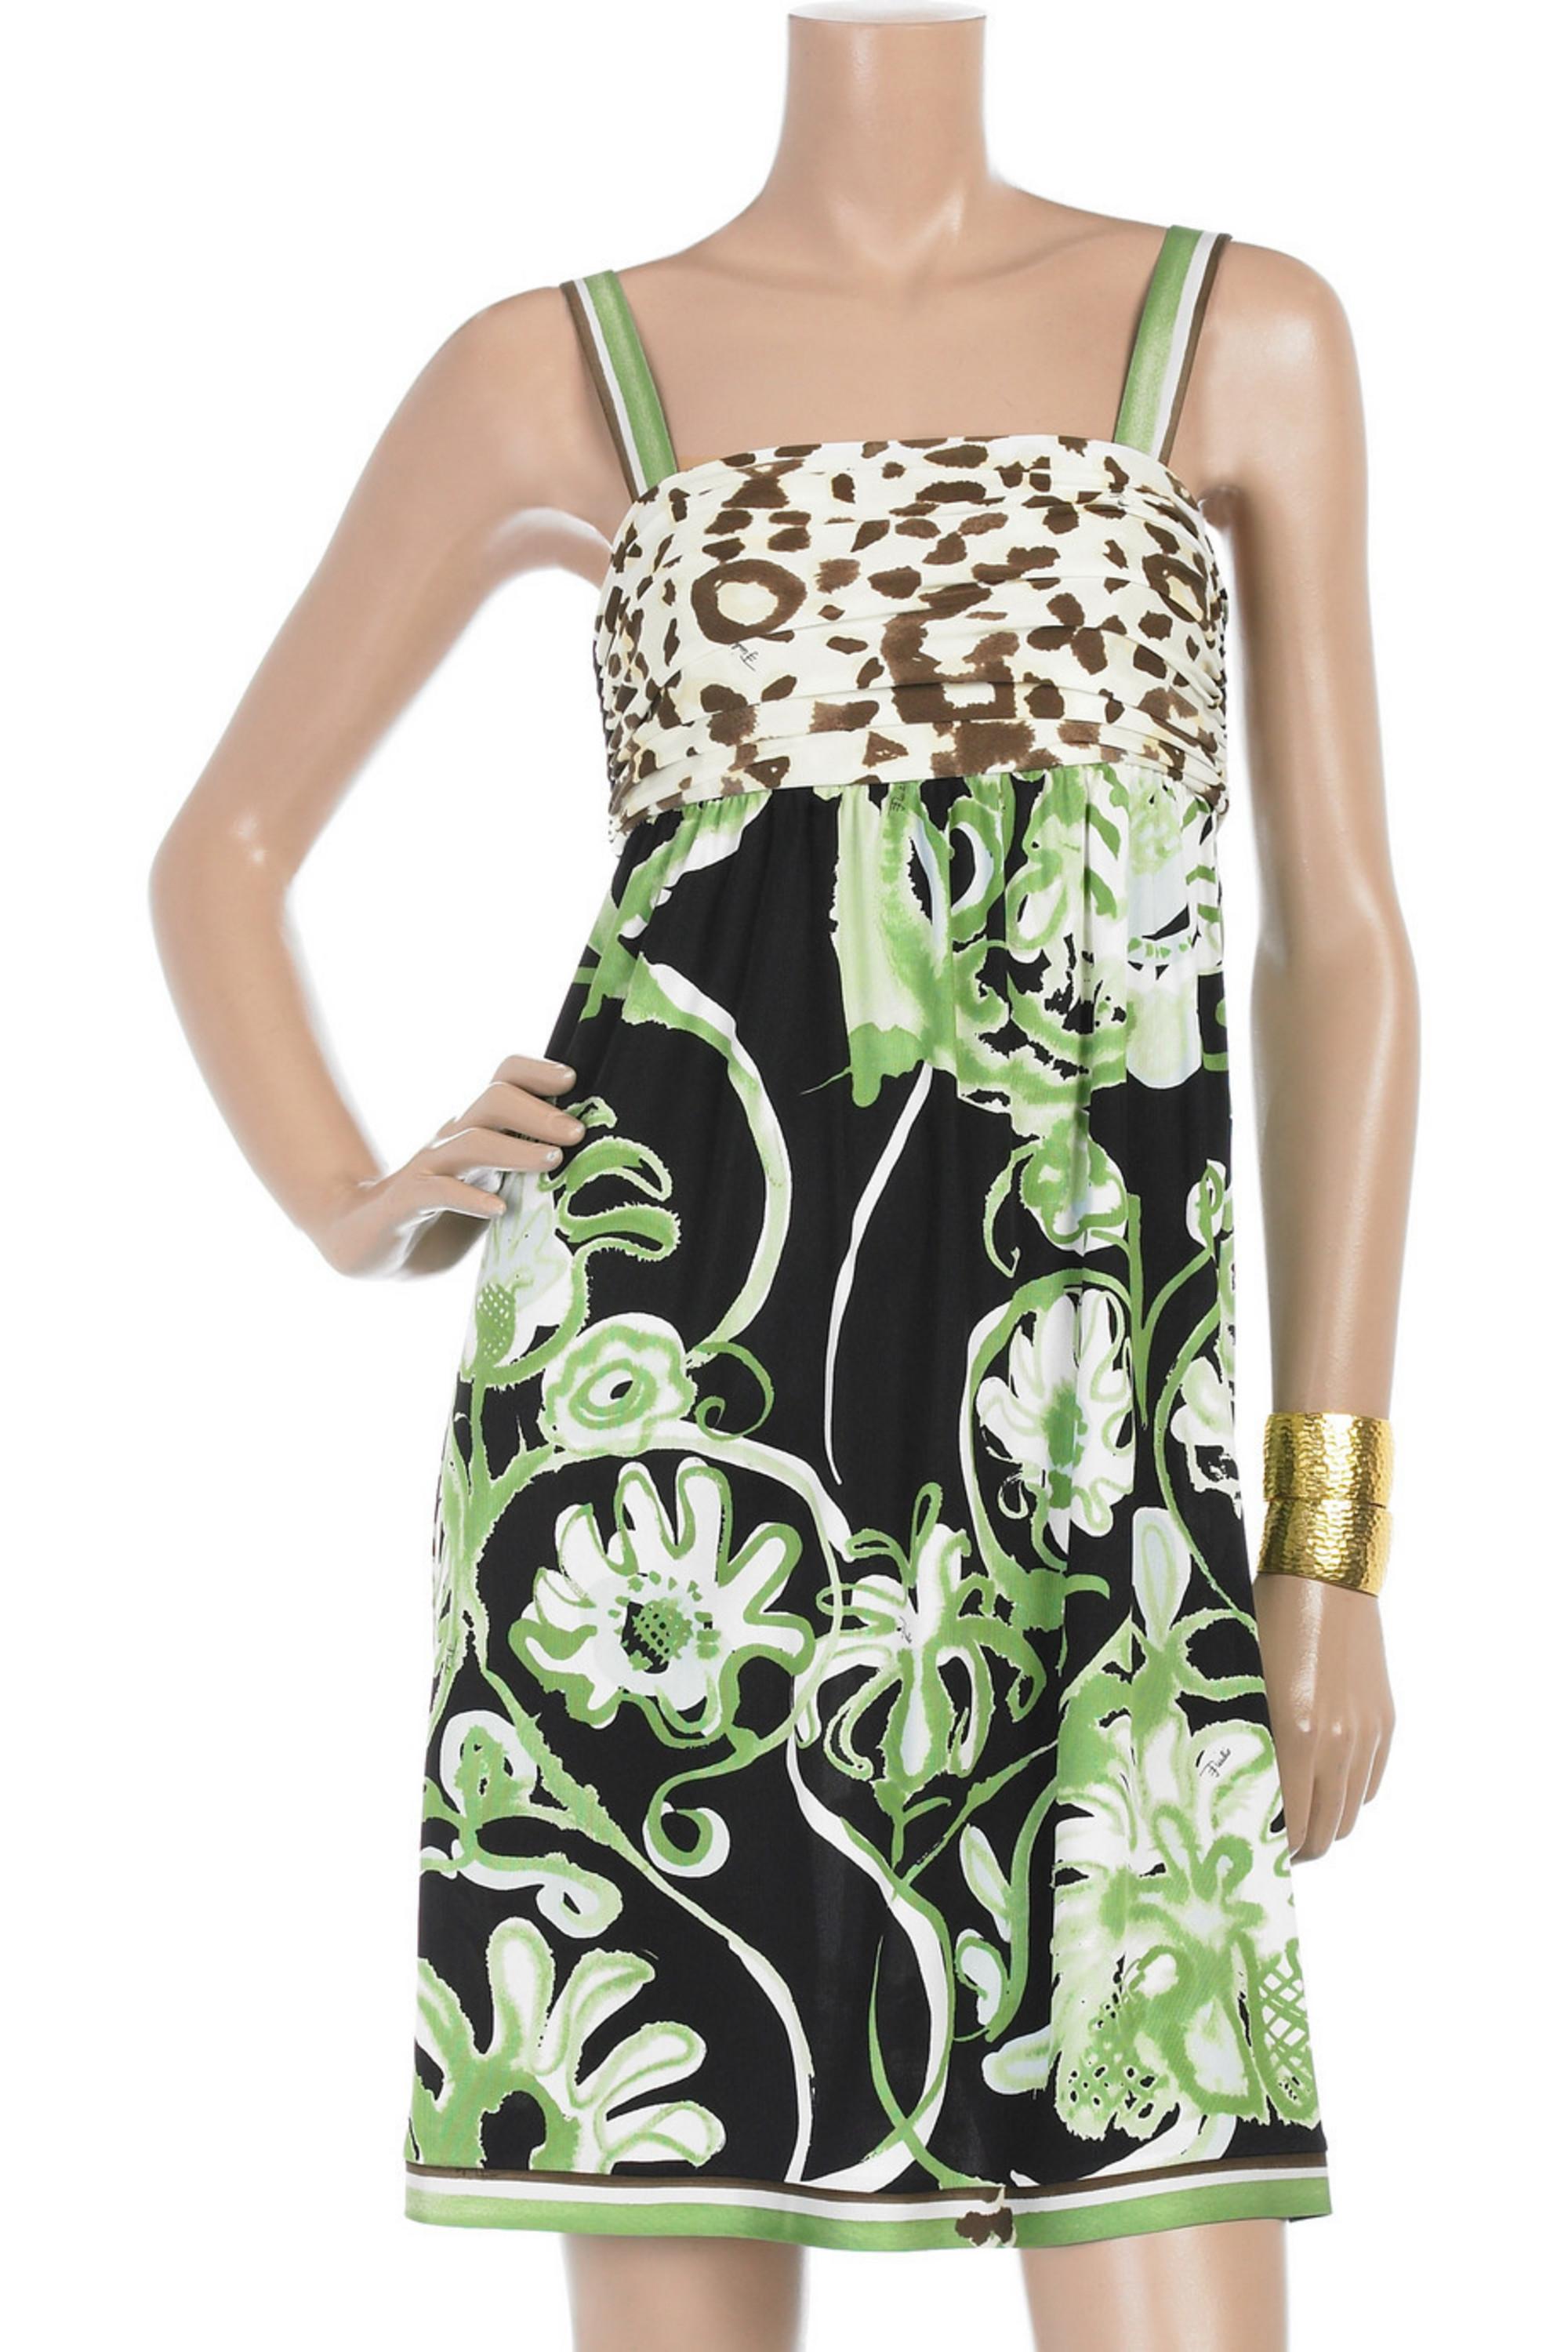 NEW Emilio Pucci Silk Jungle Cheetah Animal Floral Botanical Print Dress 40 For Sale 6